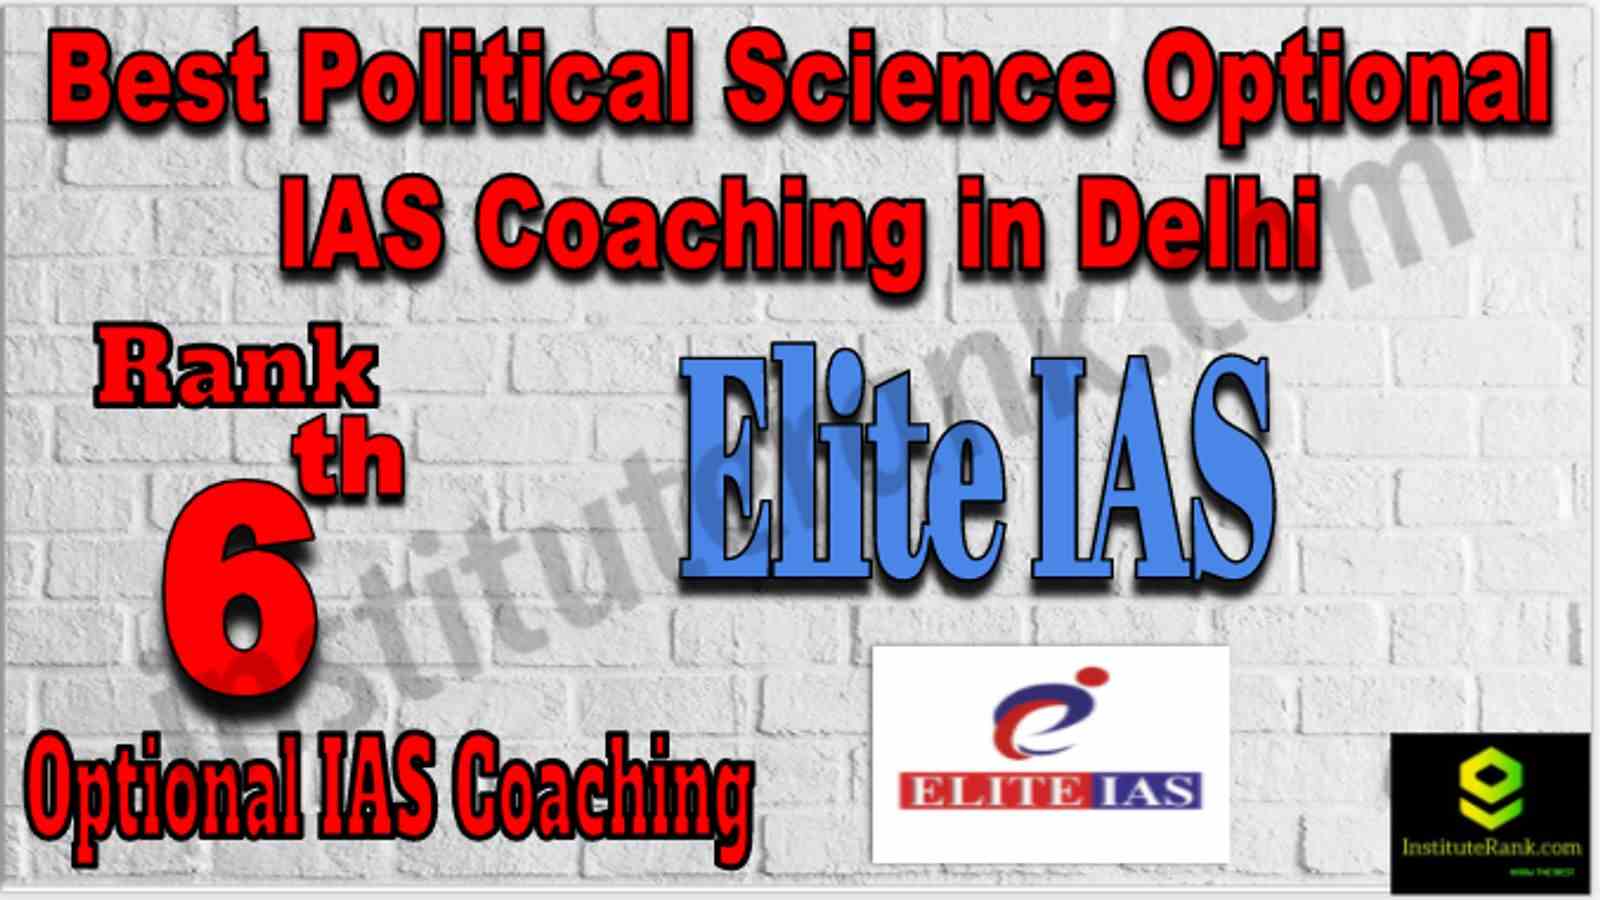 Rank 6 Best Political Science Optional IAS coachings in Delhi